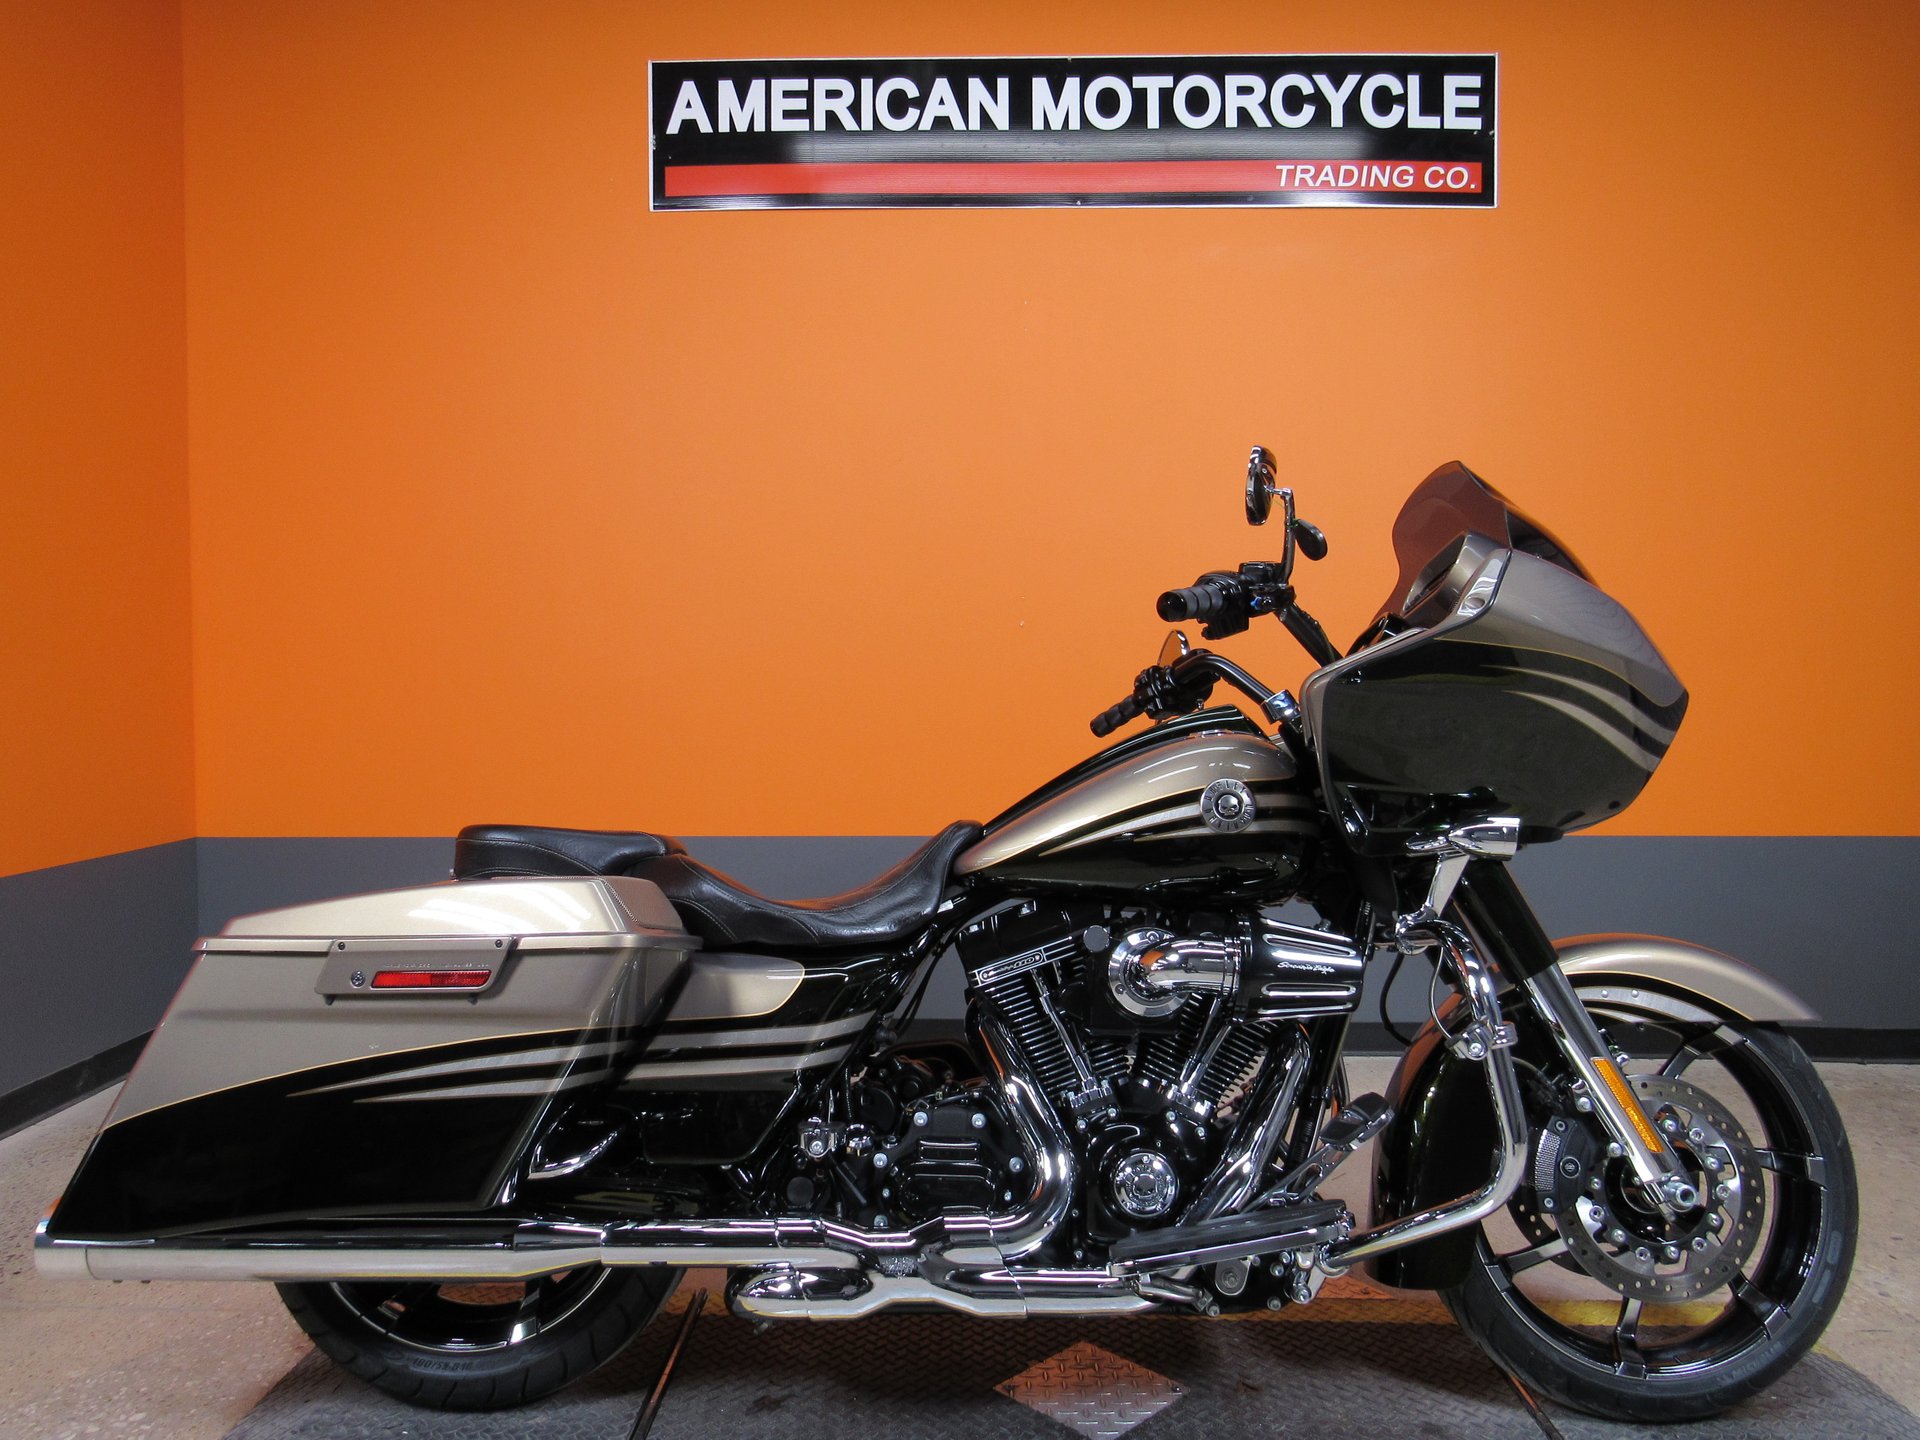 2013 Harley-Davidson CVO Road Glide | American Motorcycle Trading Company -  Used Harley Davidson Motorcycles